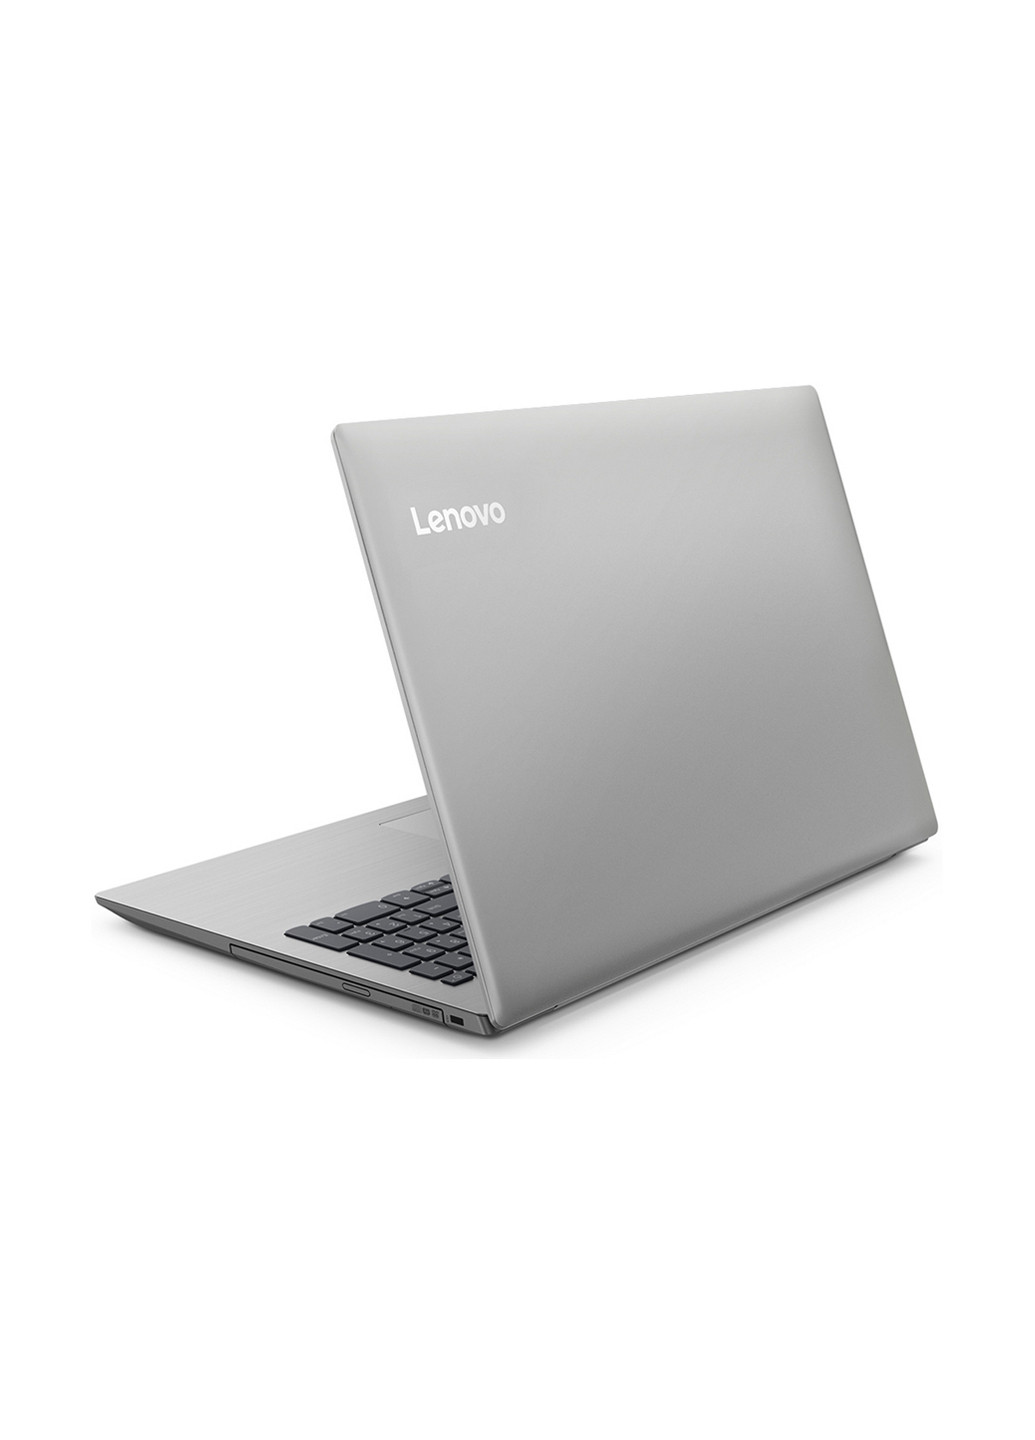 Ноутбук Lenovo ideapad 330-15 (81dc012dra) platinum grey (132994121)